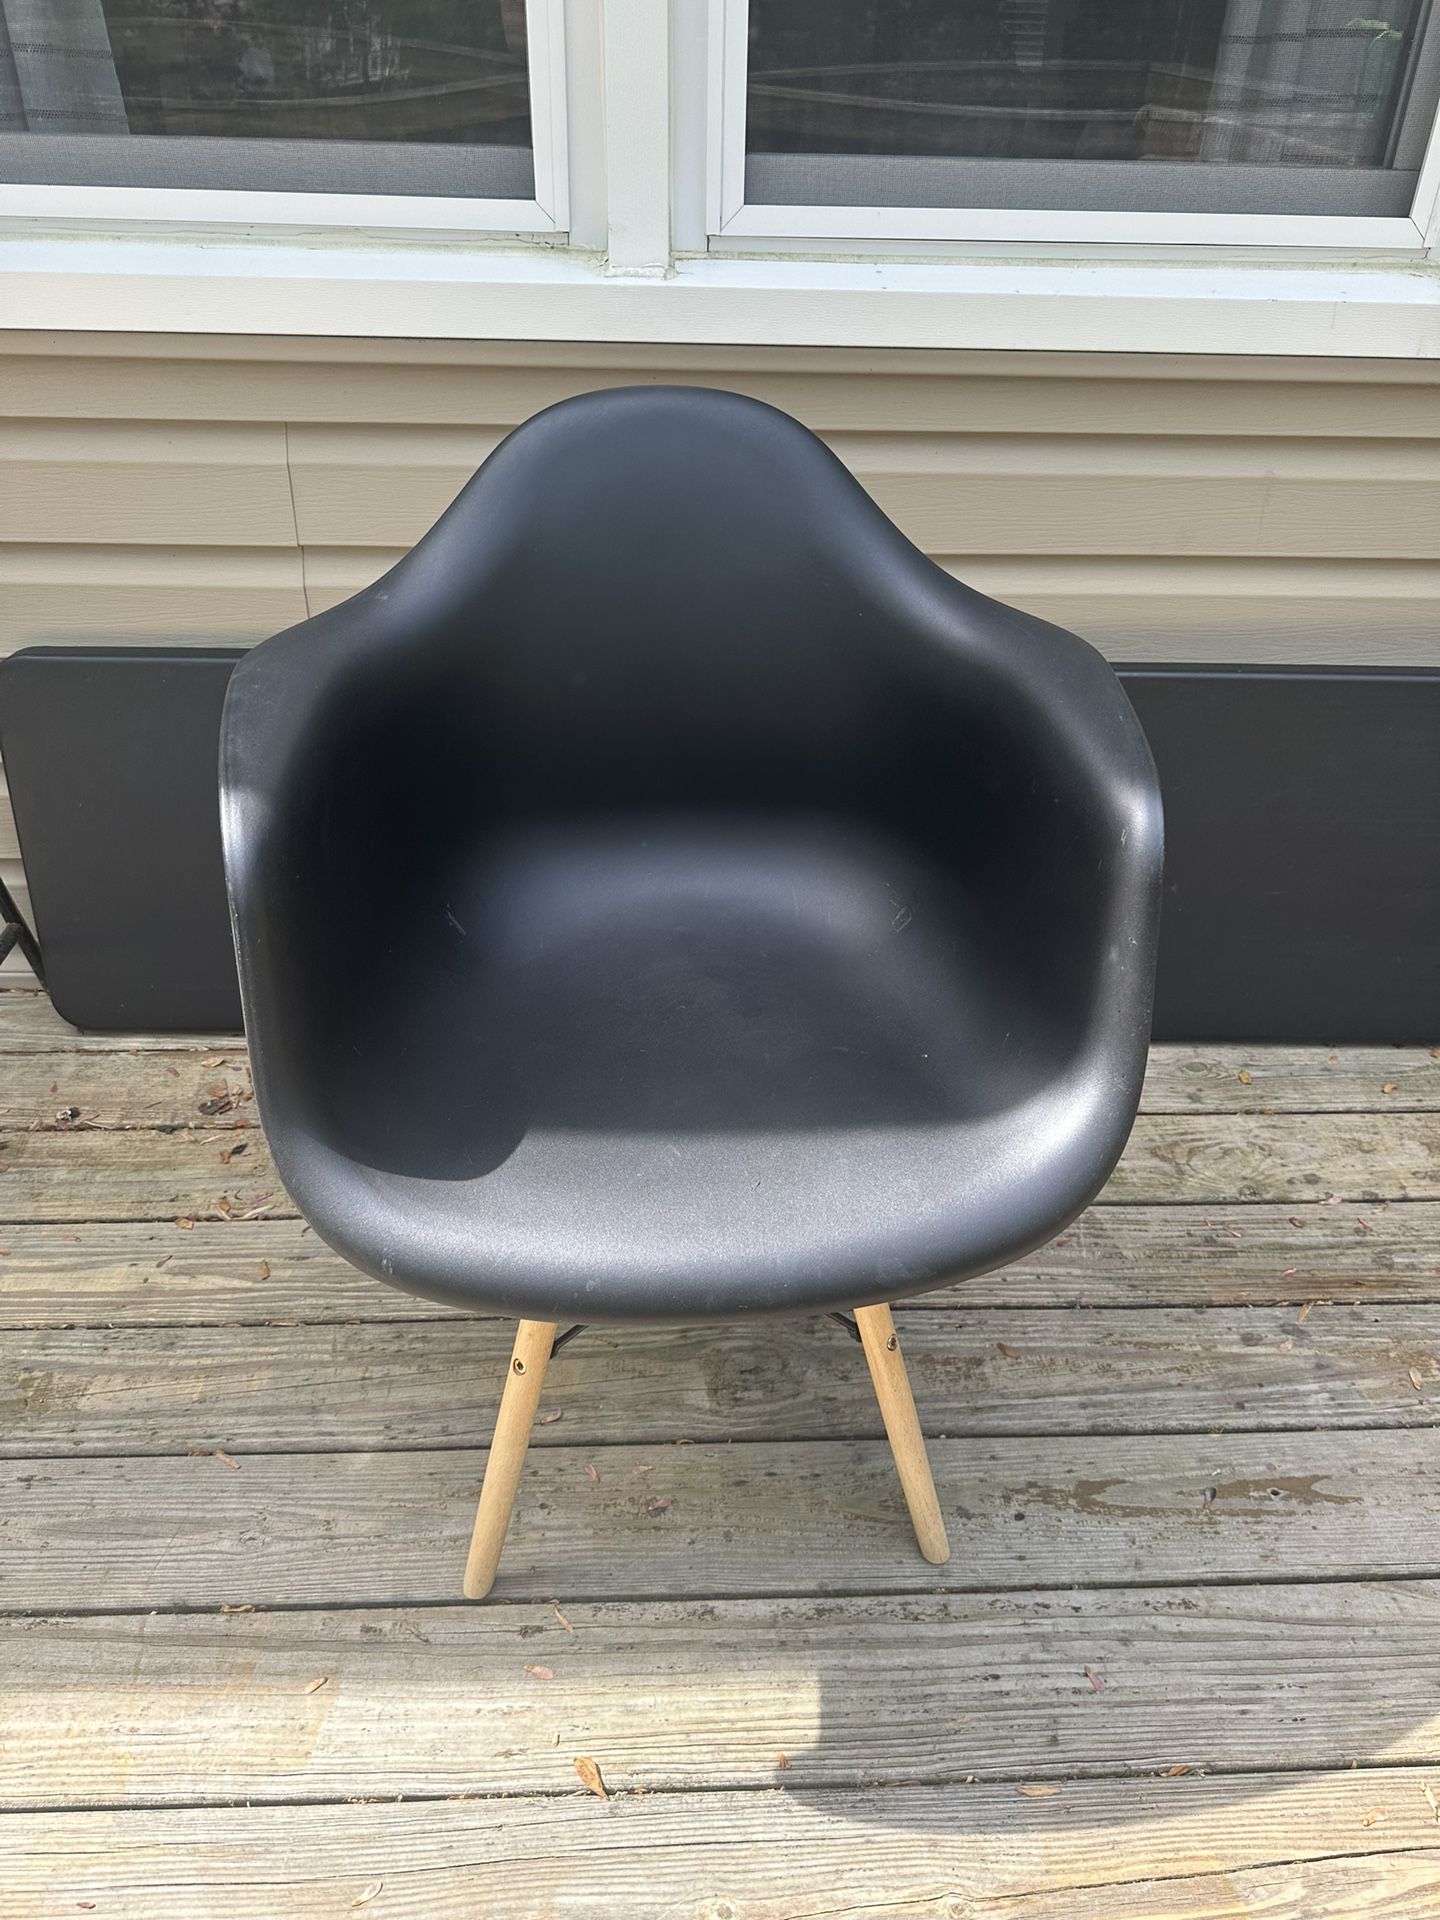 Two Black Arm Chair Indooor/outdoor